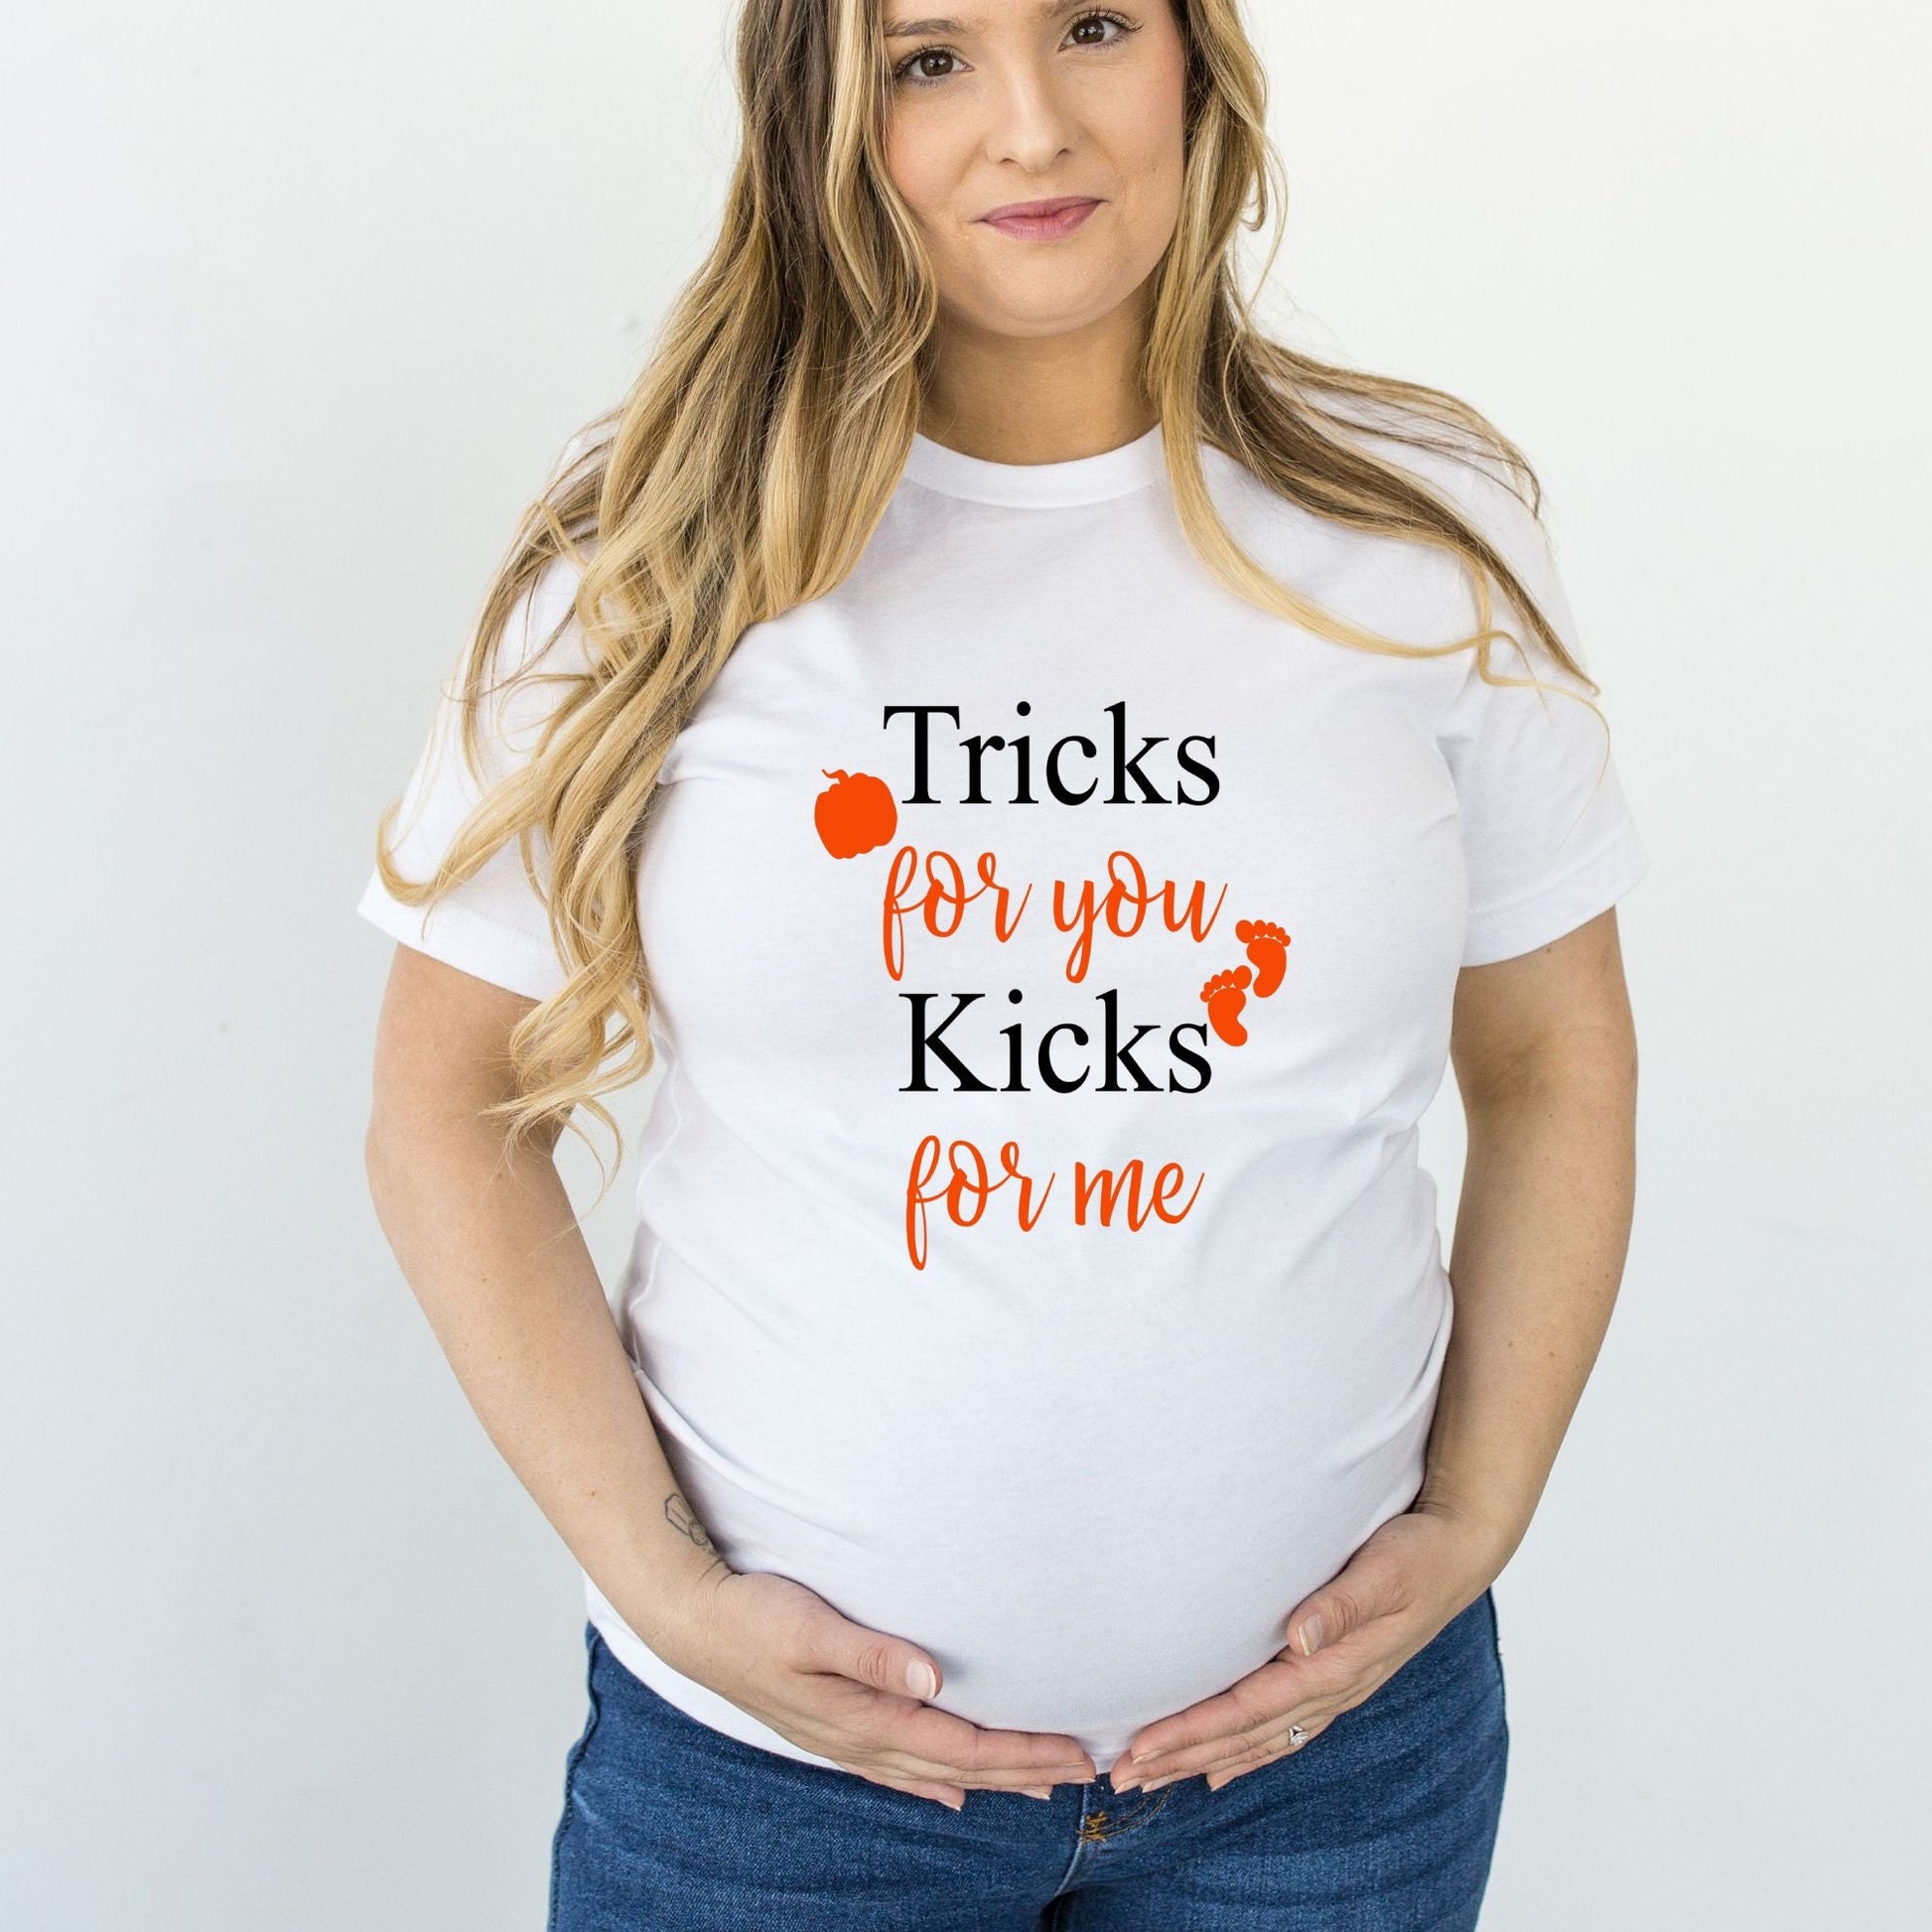 Tricks for you Kicks for. me T-Shirt, Skateboarding Shirt, Skateboarder Gift, Skater Shirts, Gift For Friend, Funny Skating Tee Shirt